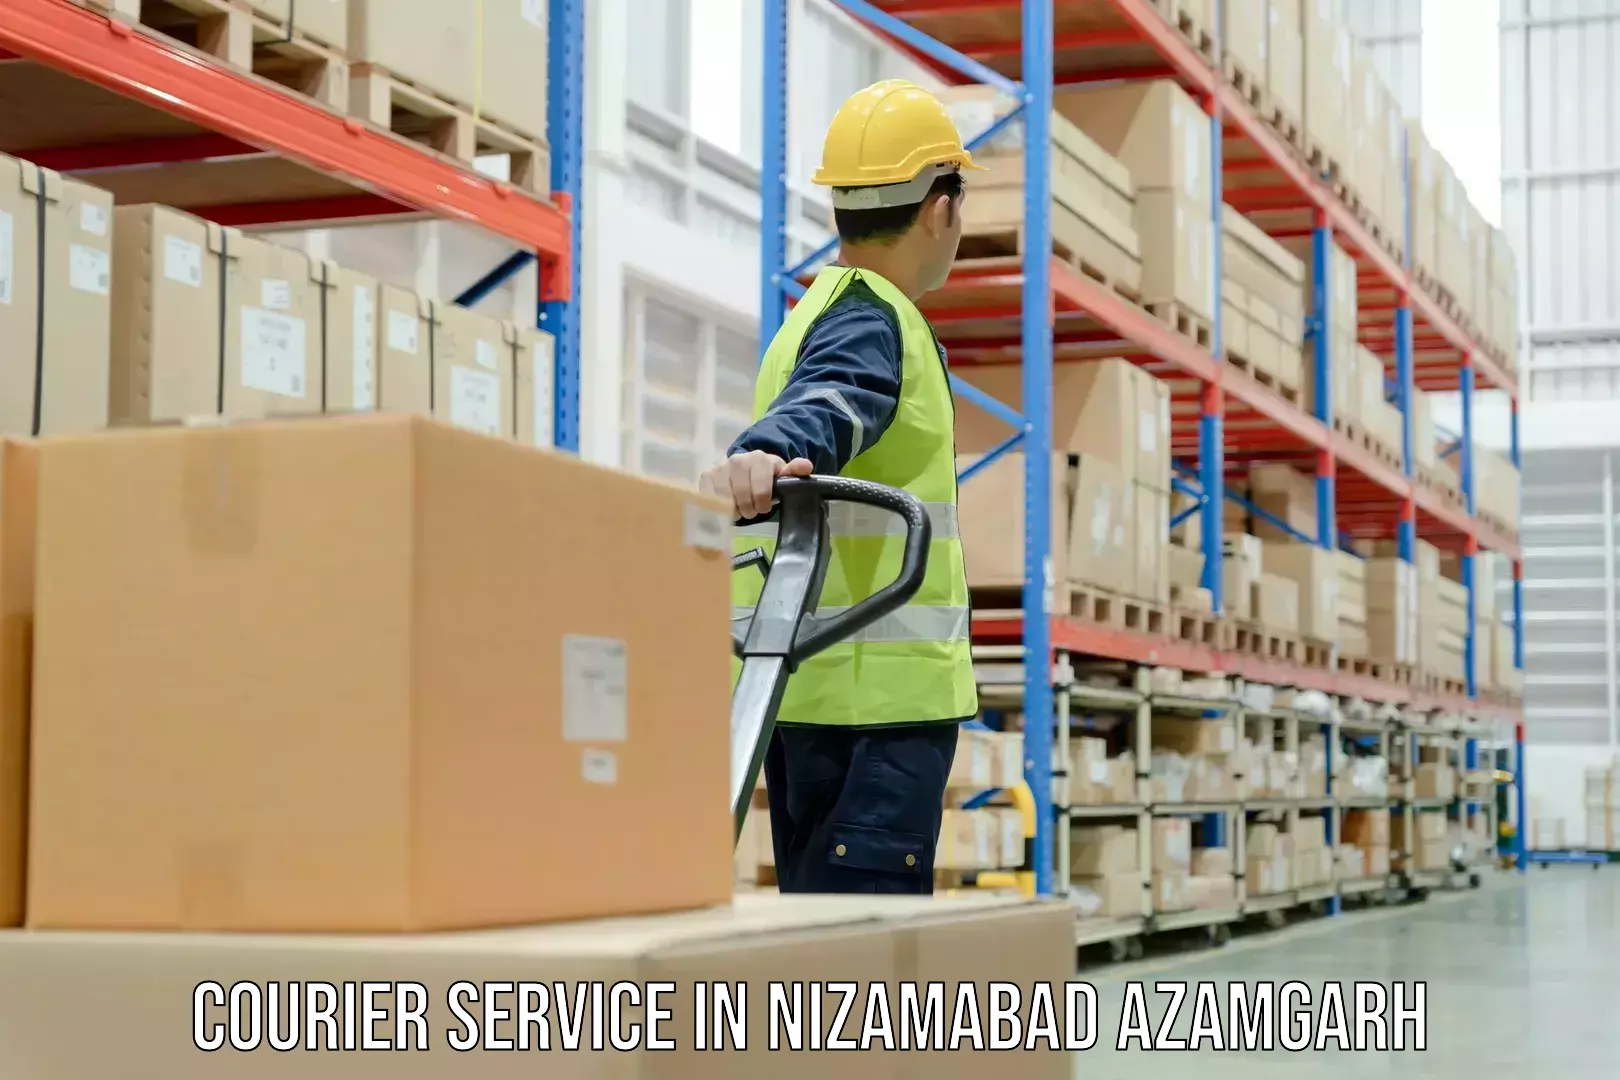 Courier service innovation in Nizamabad Azamgarh